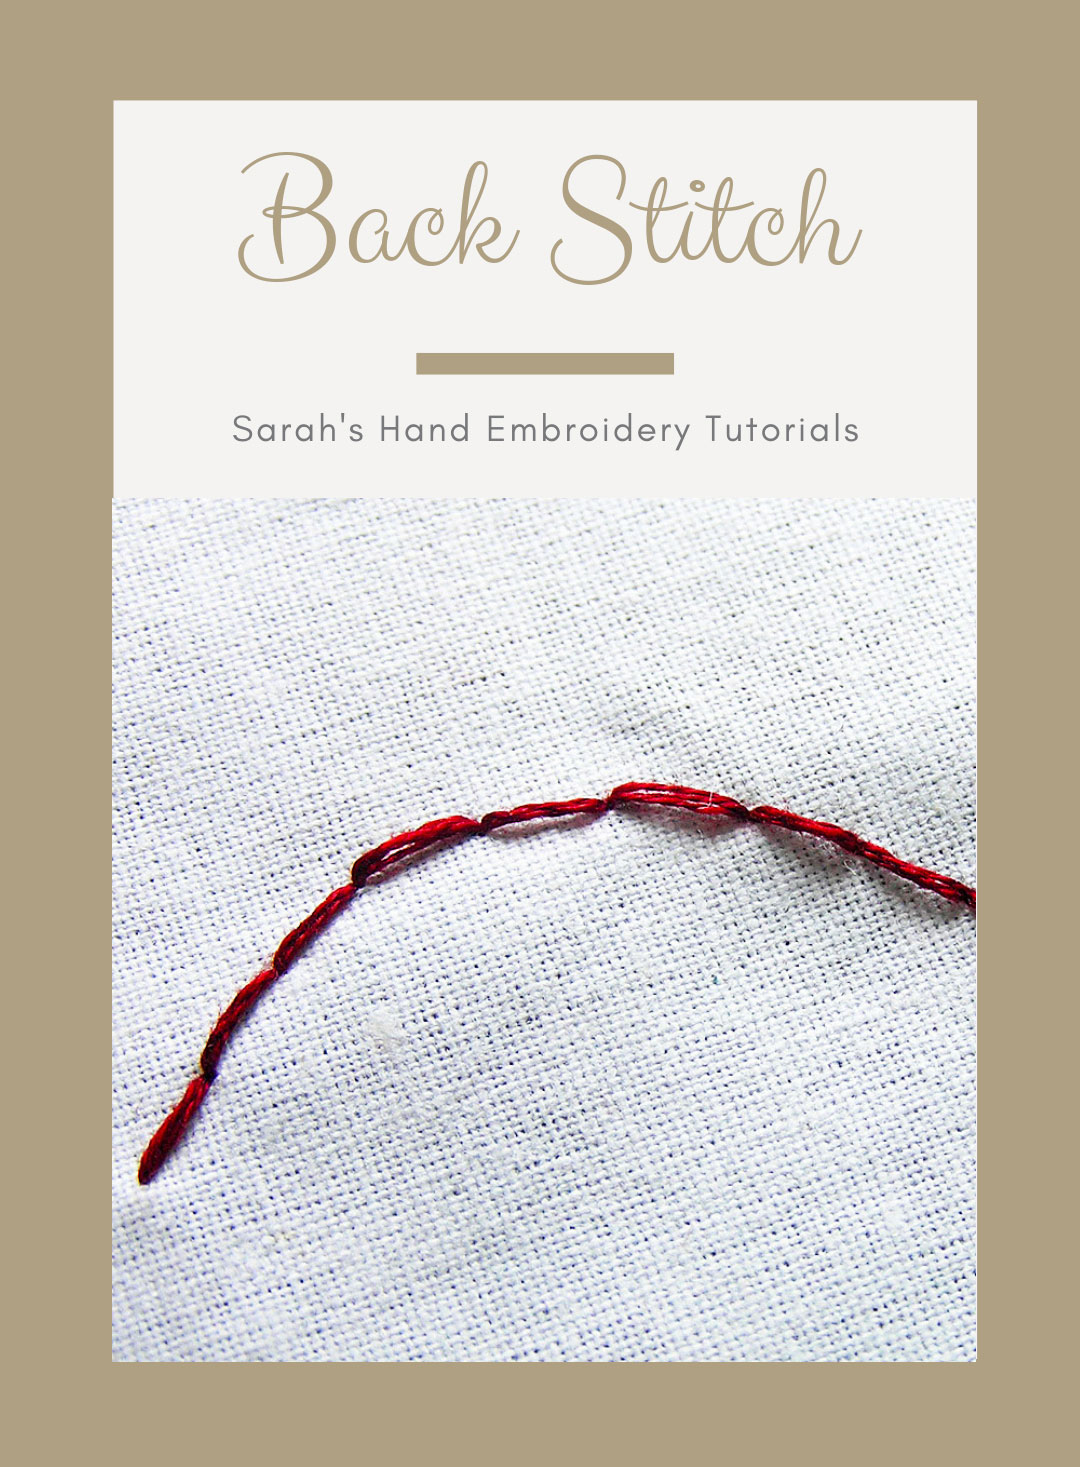 Split back stitch